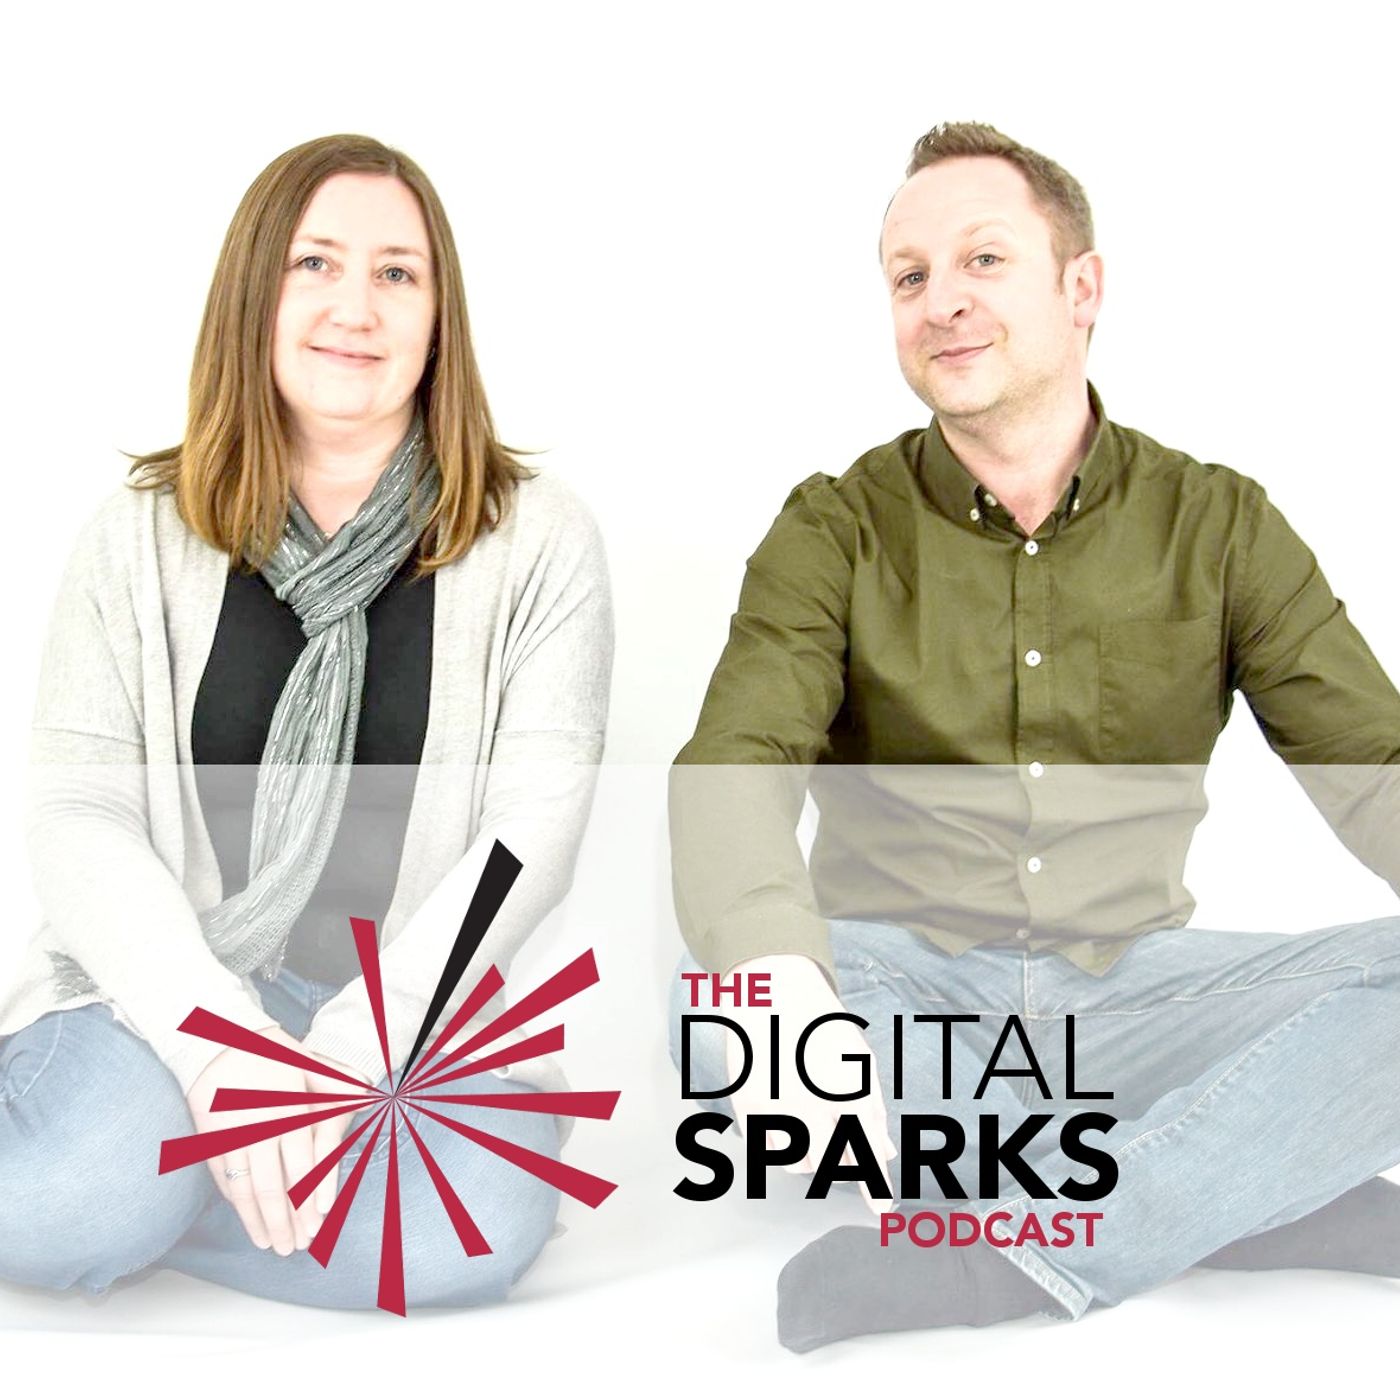 The Digital Sparks Podcast